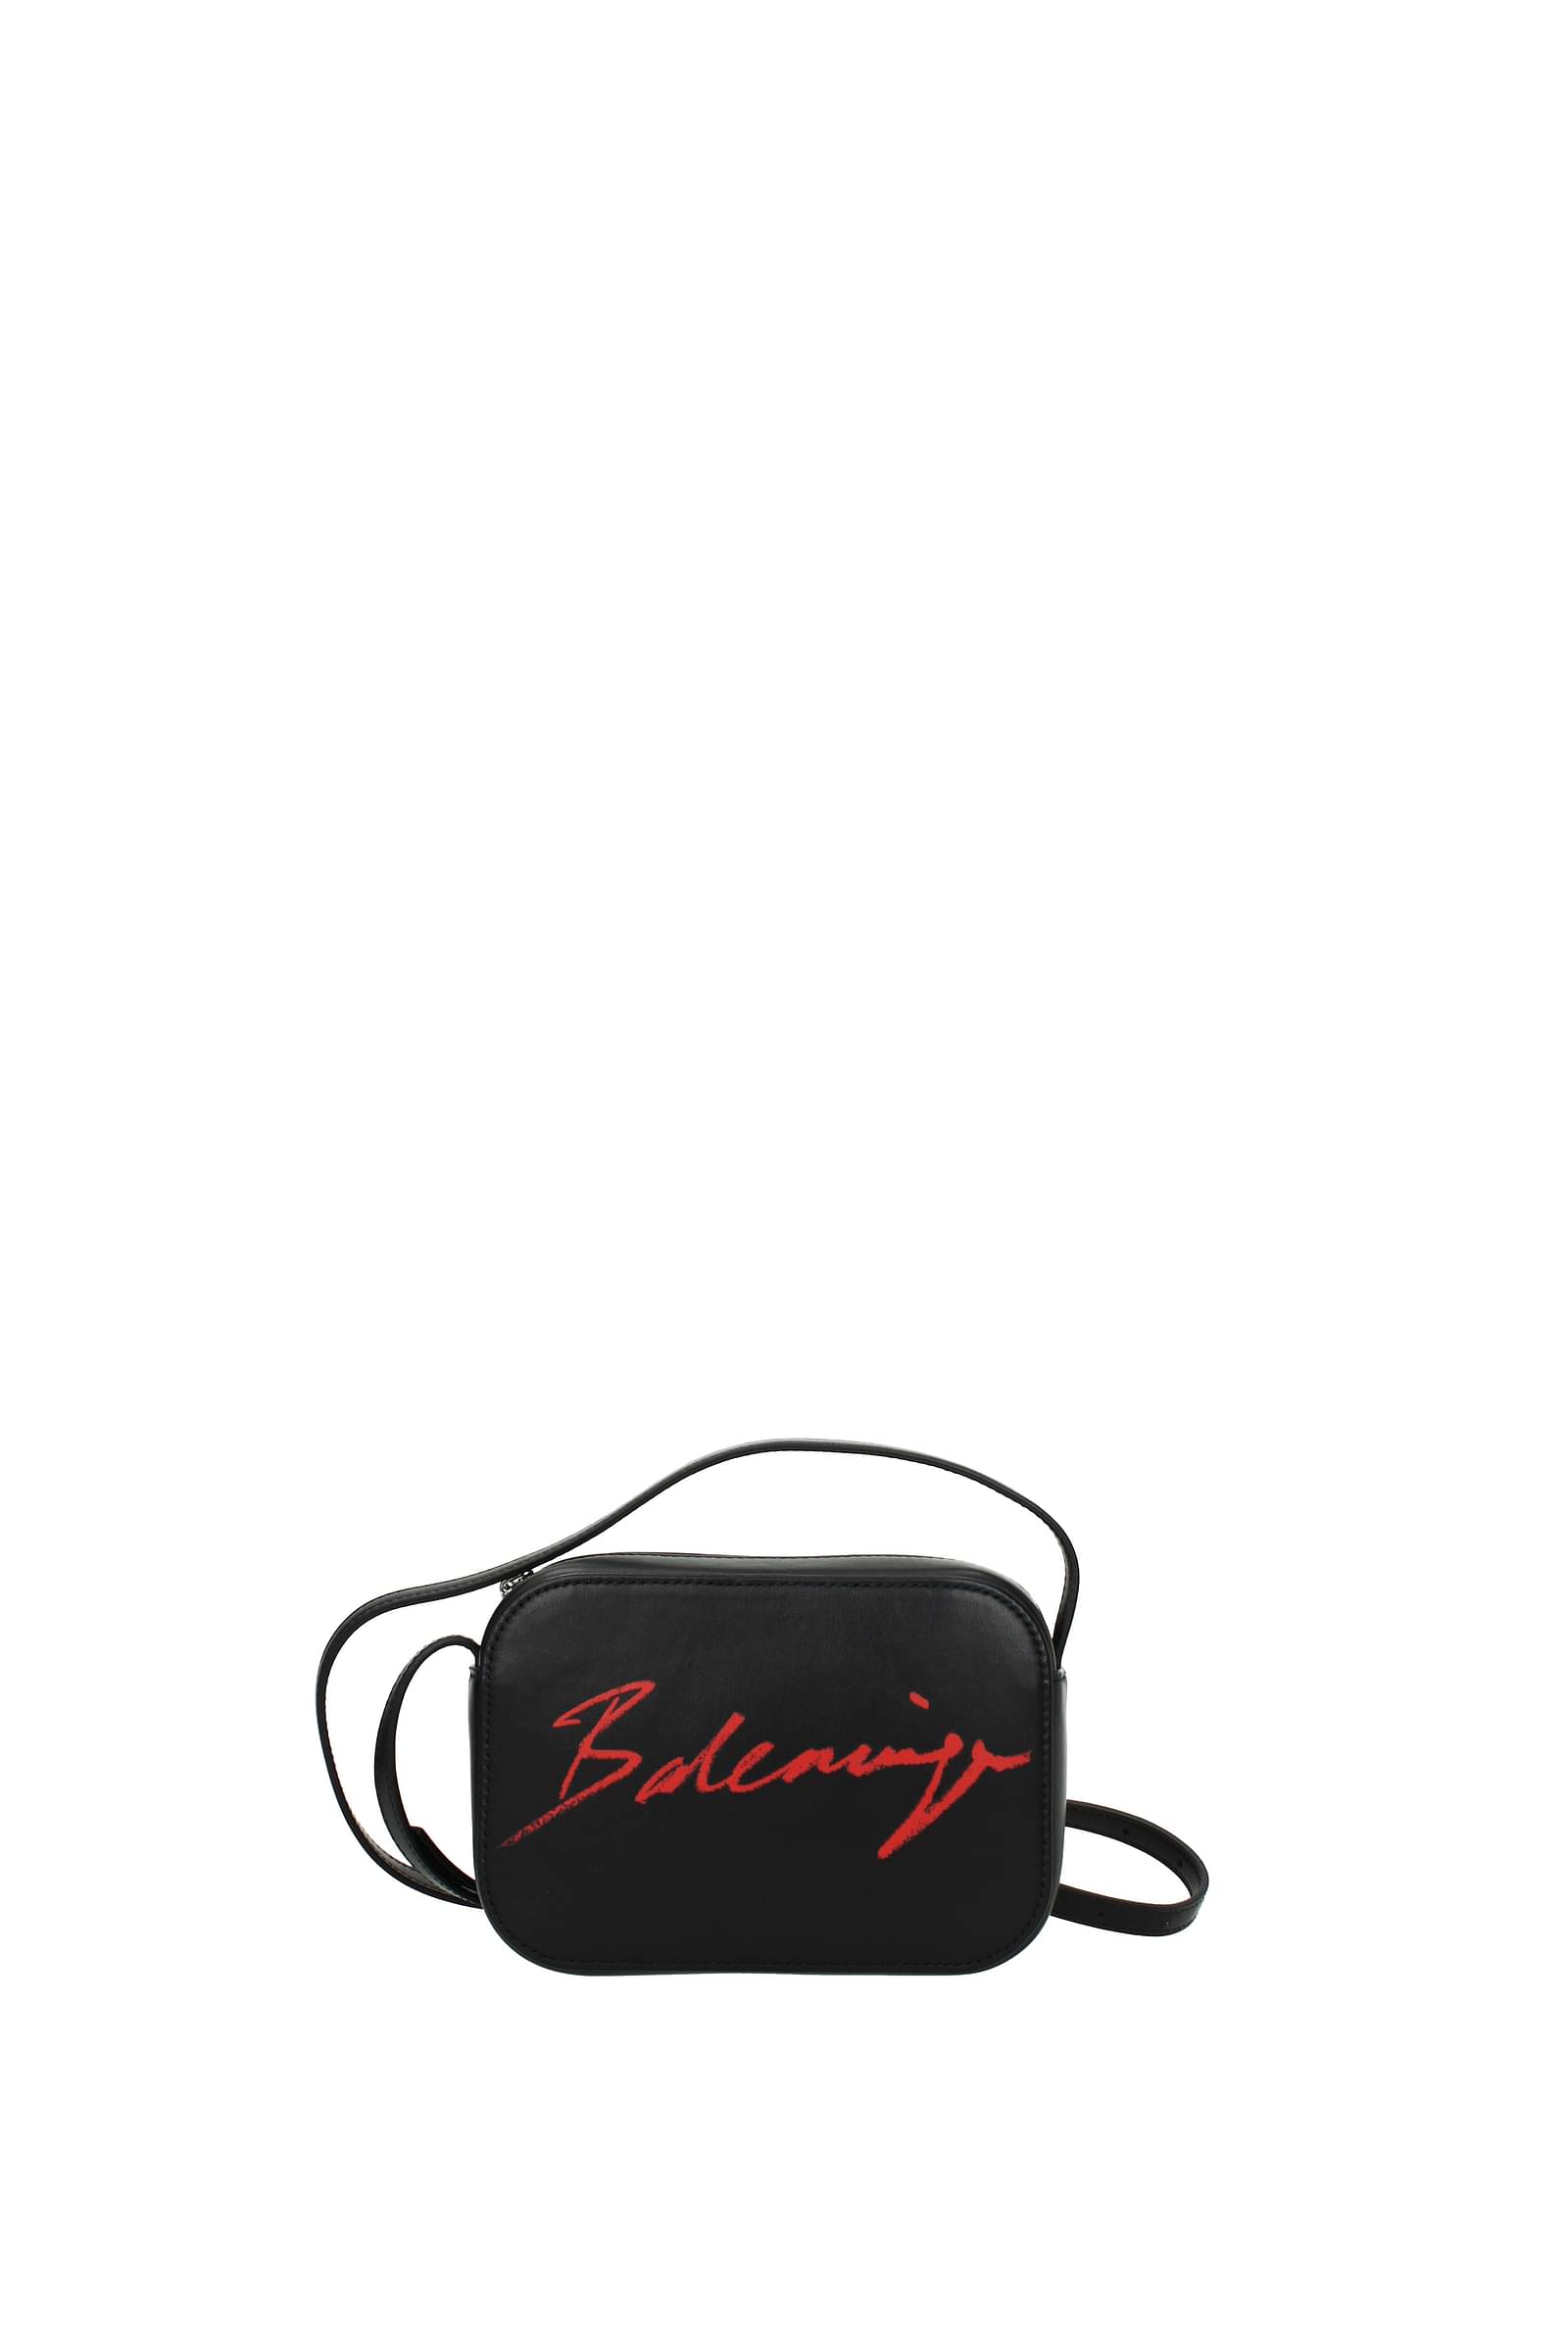 Balenciaga Messenger  Crossbody Bags for Women on Sale  FARFETCH